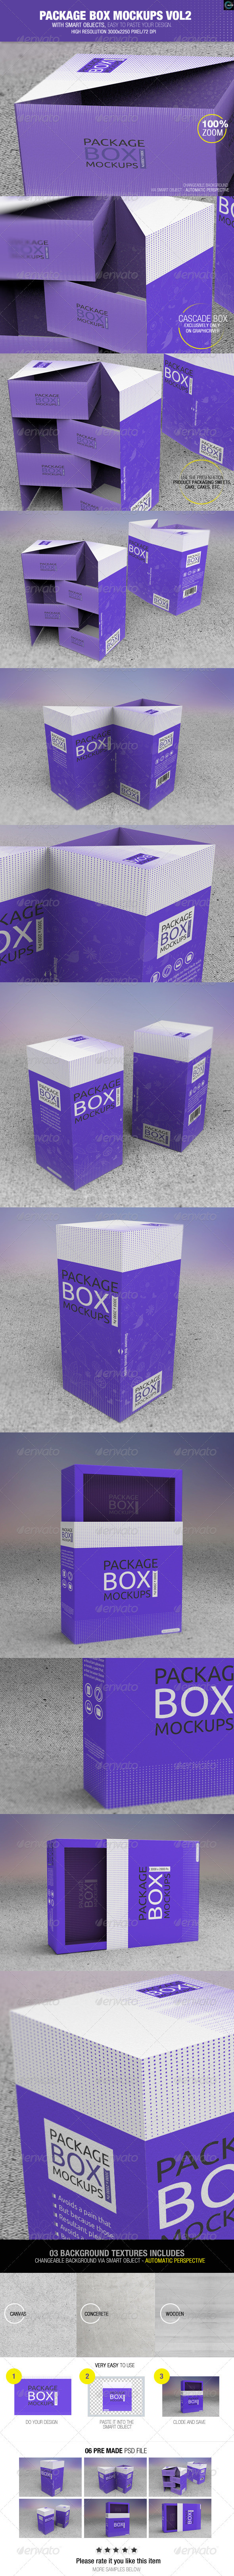 Package box mockups v2 preview